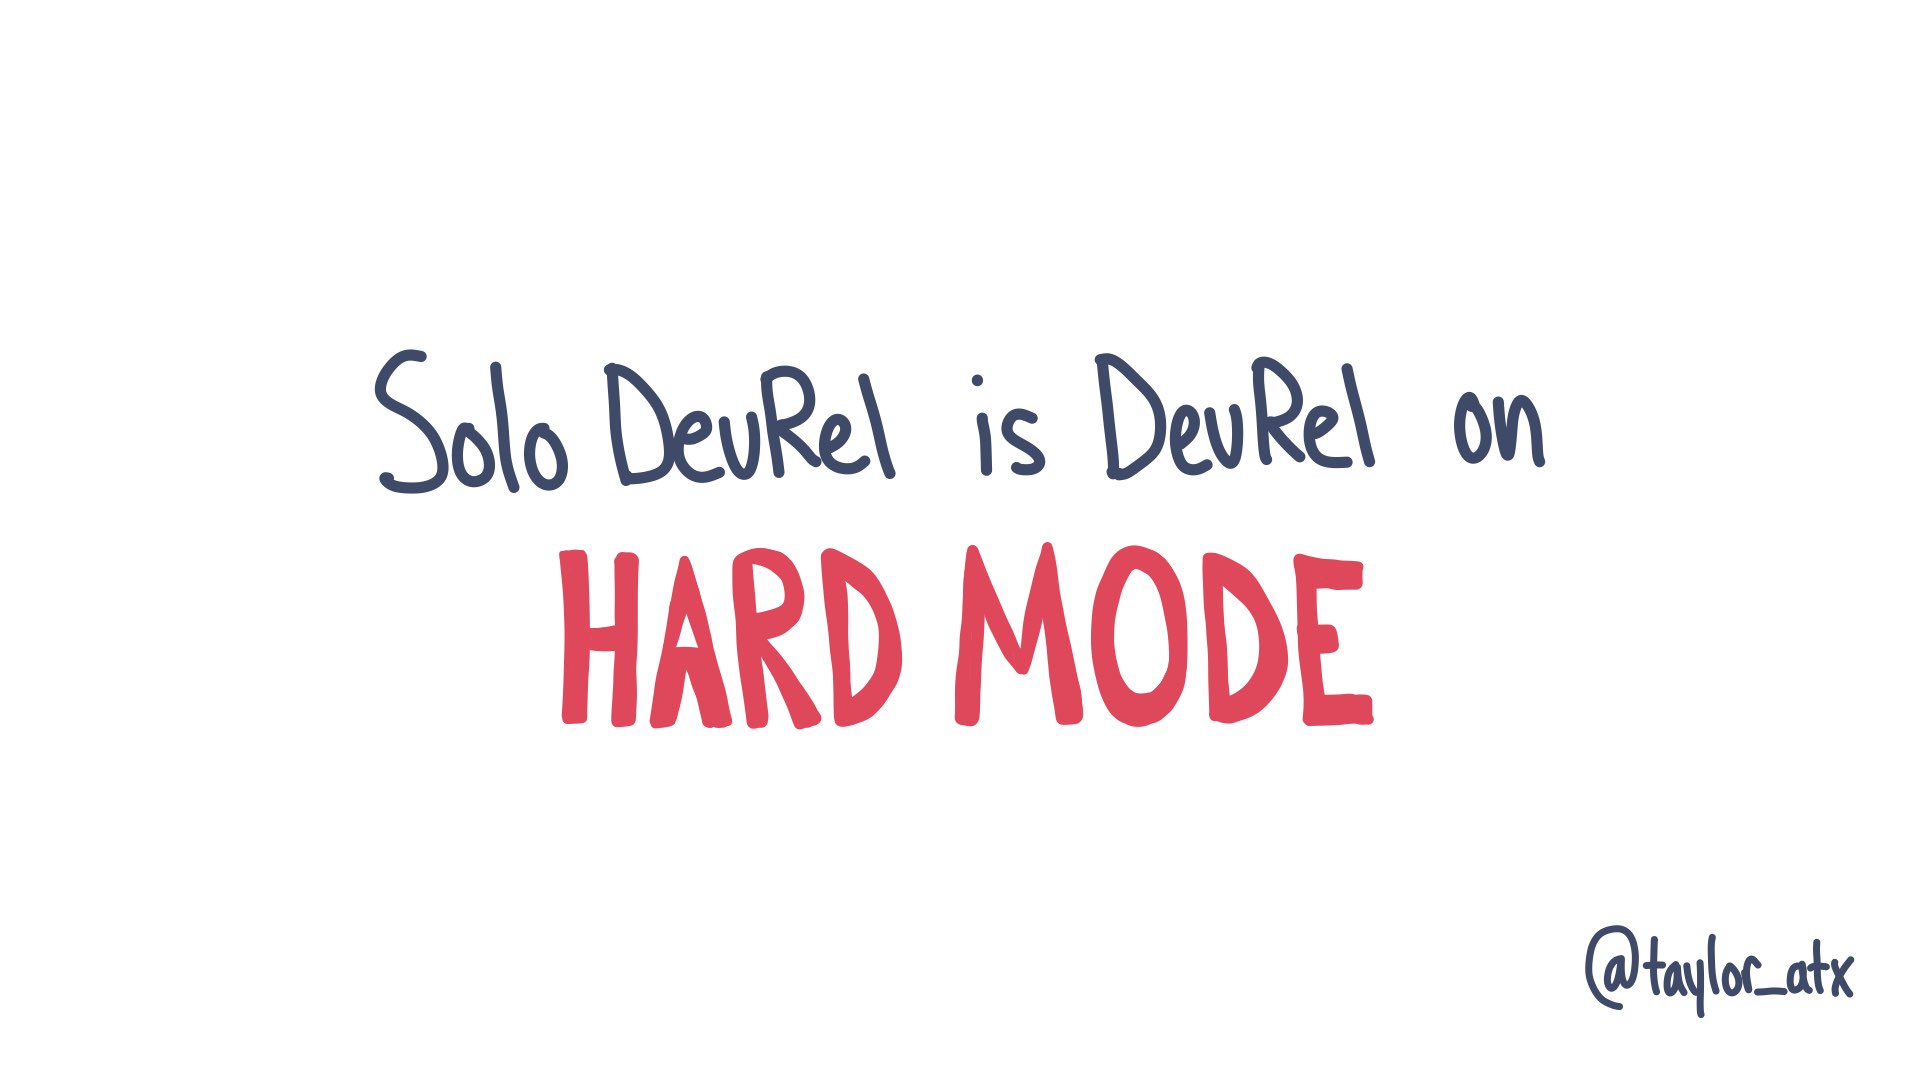 Solo DevRel is DevRel on HARD MODE